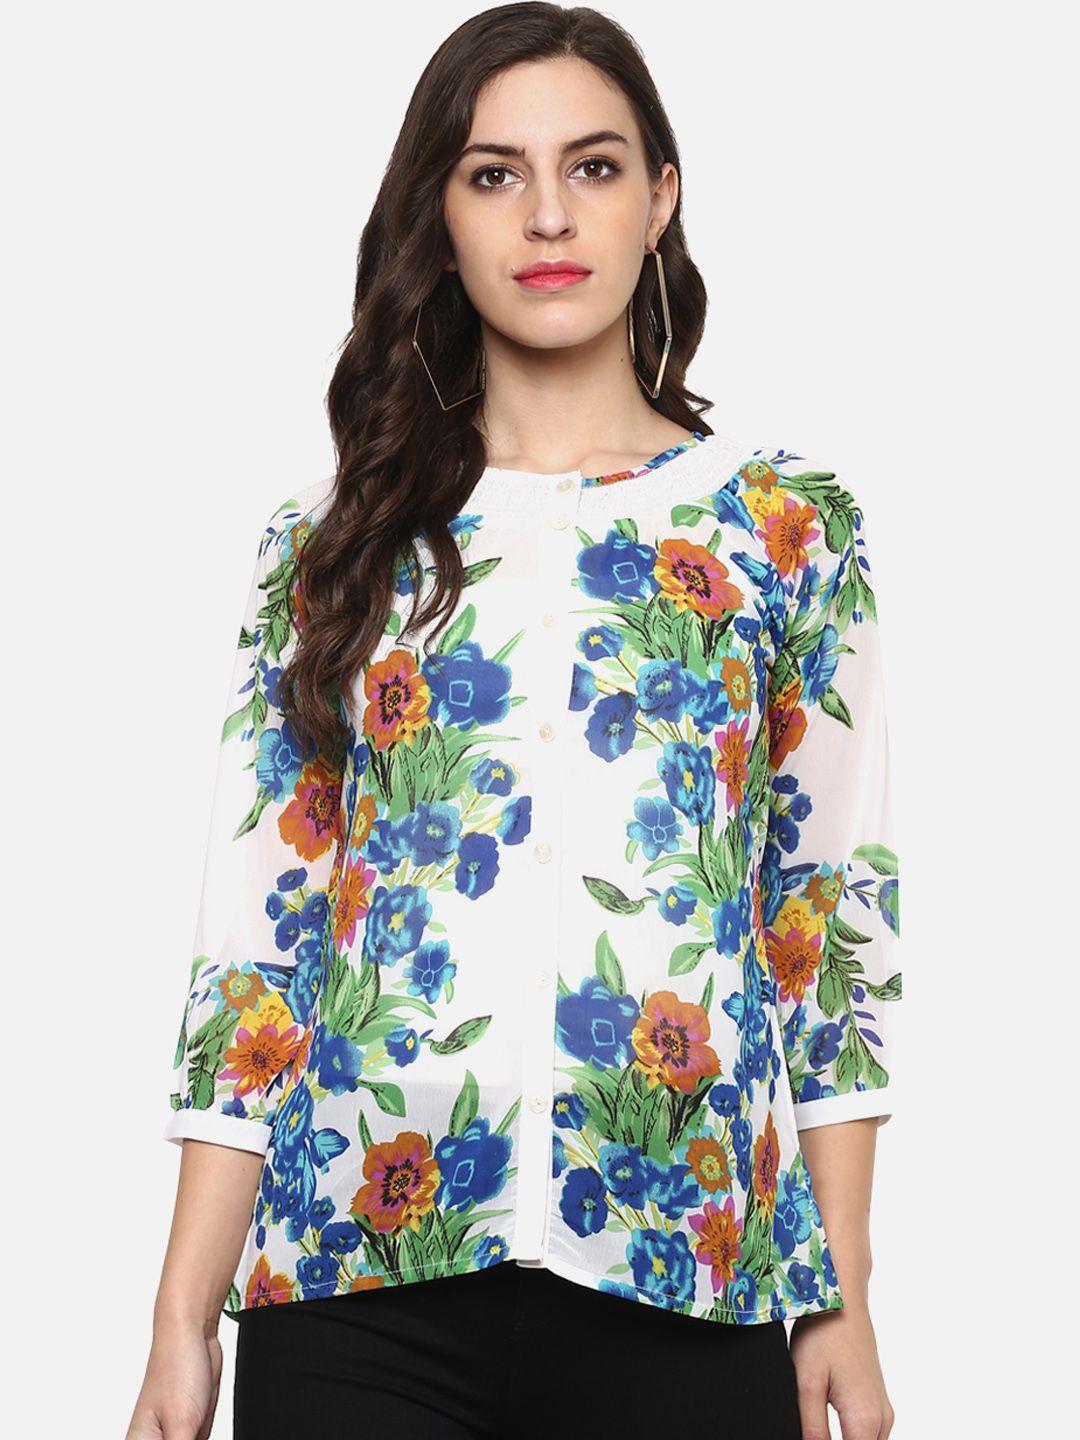 yash-gallery-women-white-printed-shirt-style-top